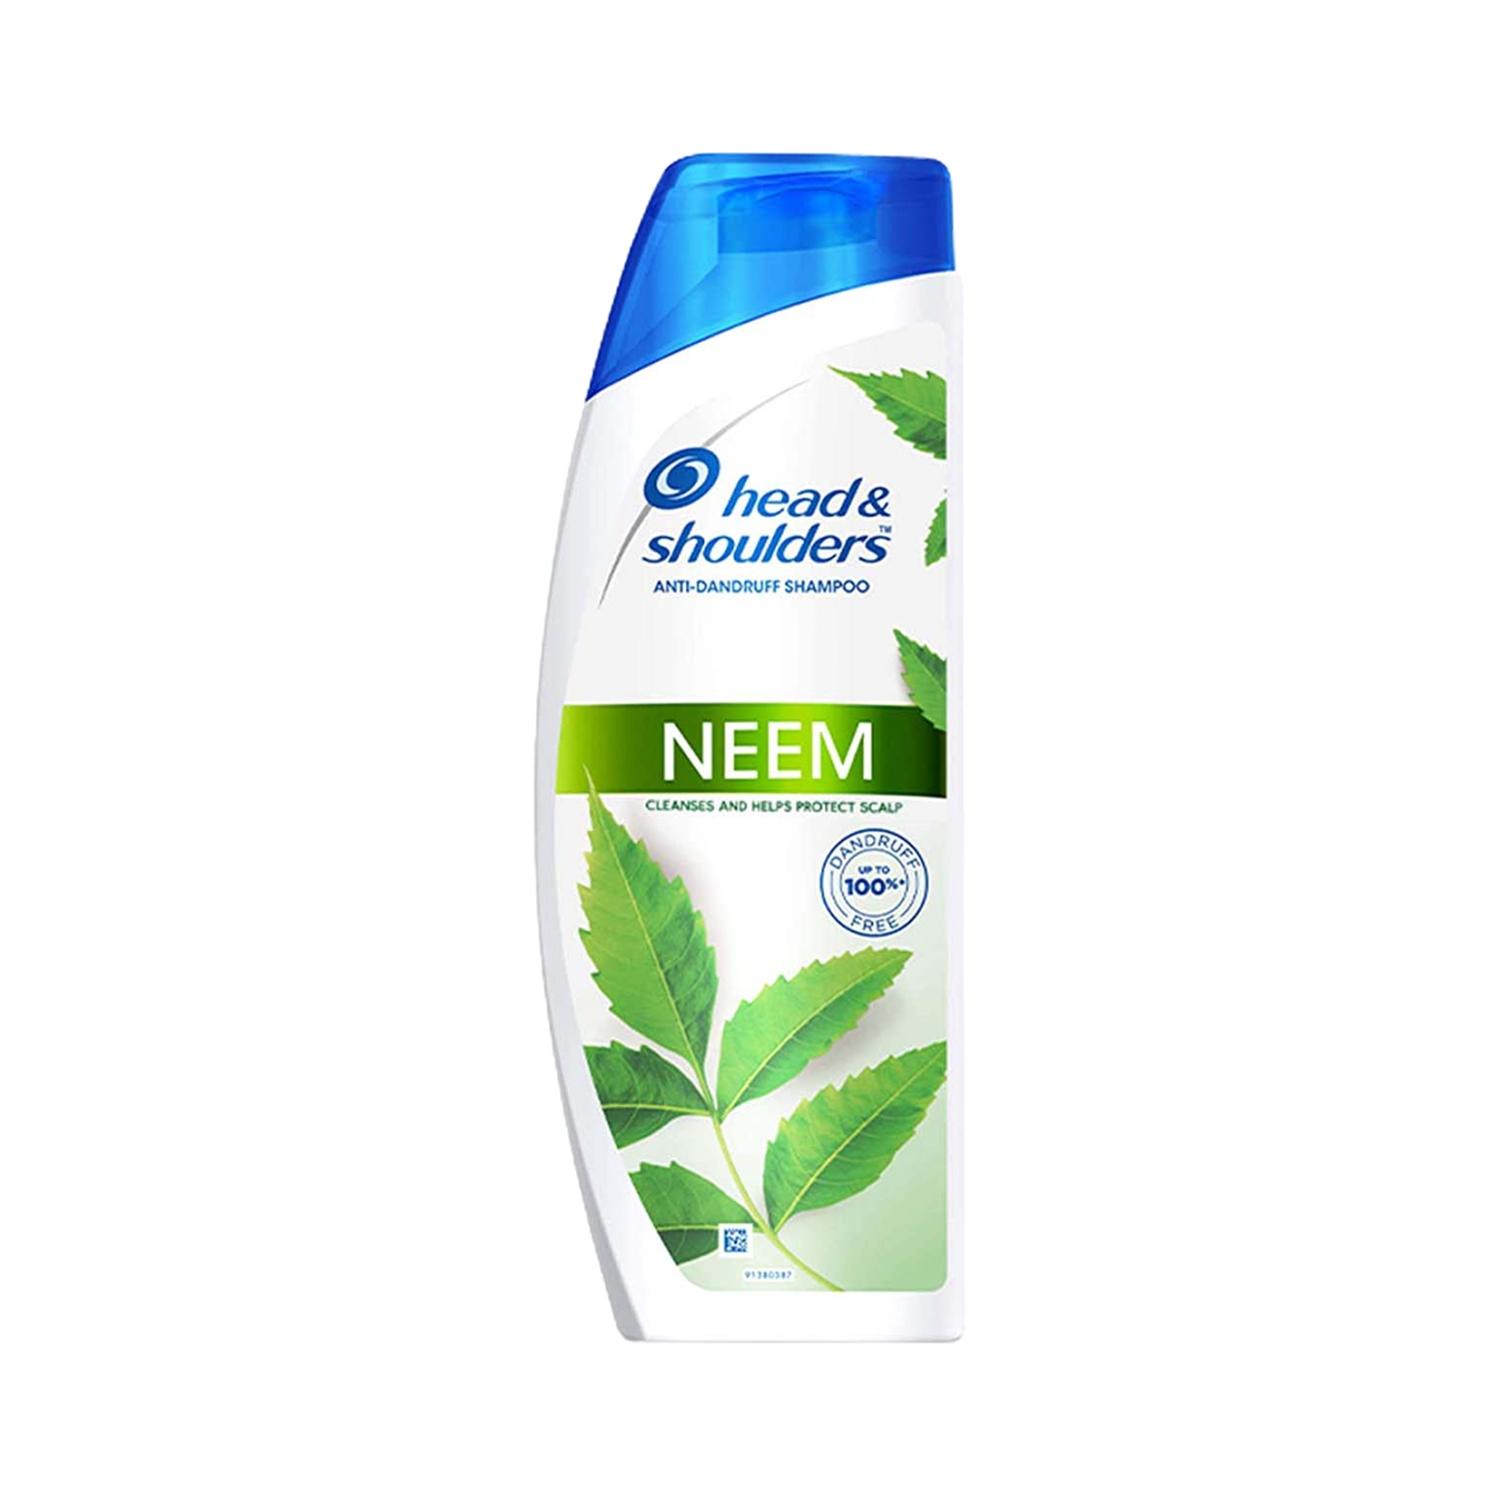 head & shoulders neem anti dandruff shampoo (340ml)